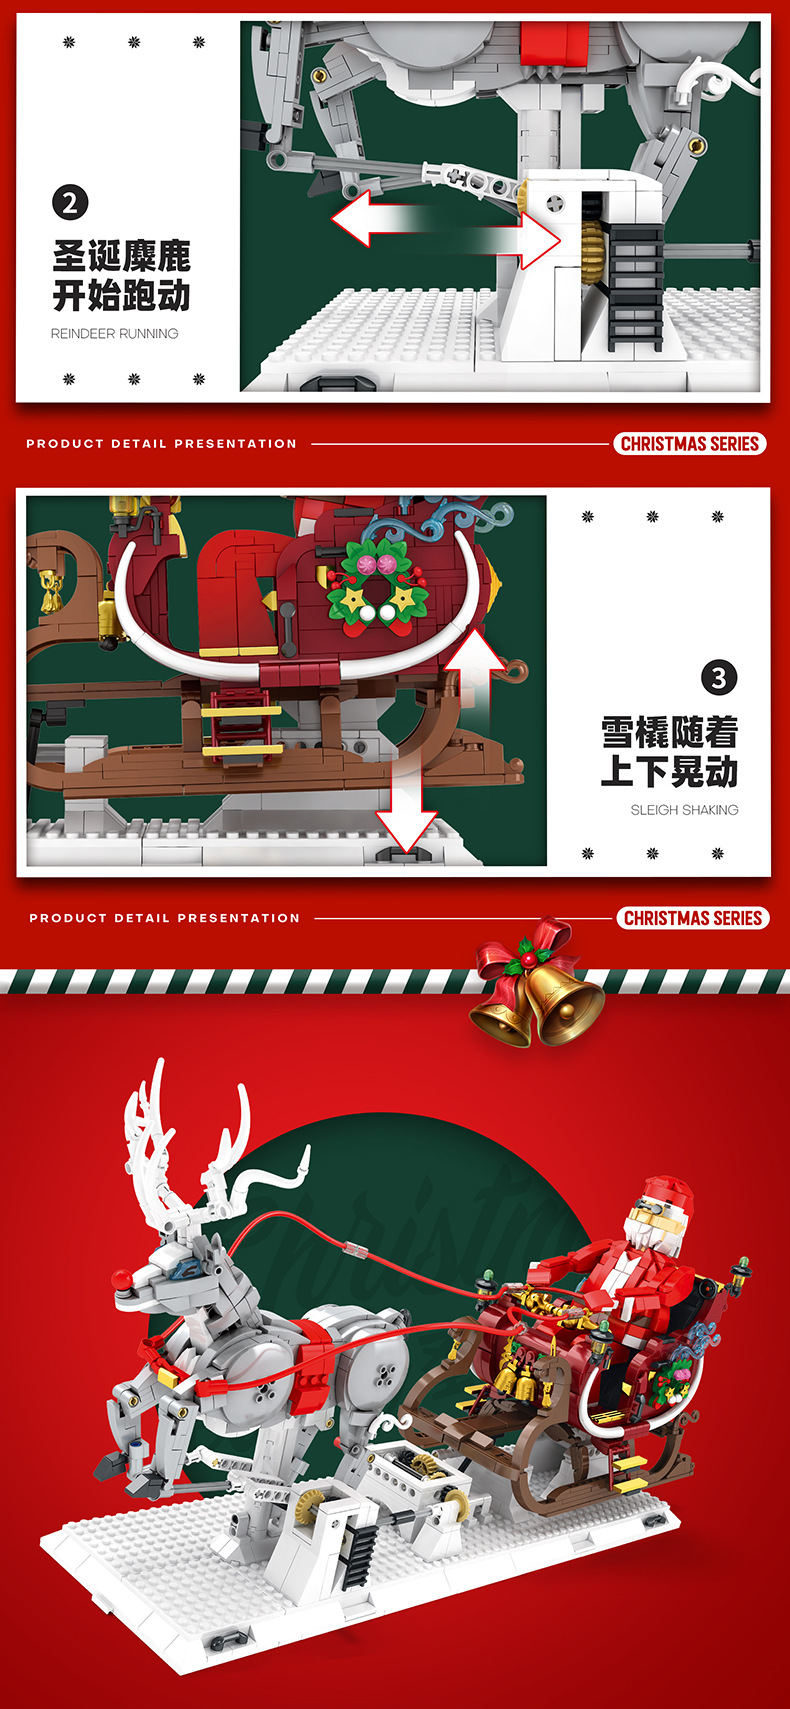 Reobrix 66002 Merry Christmas Series Juego de juguetes con bloques de trineo navideño